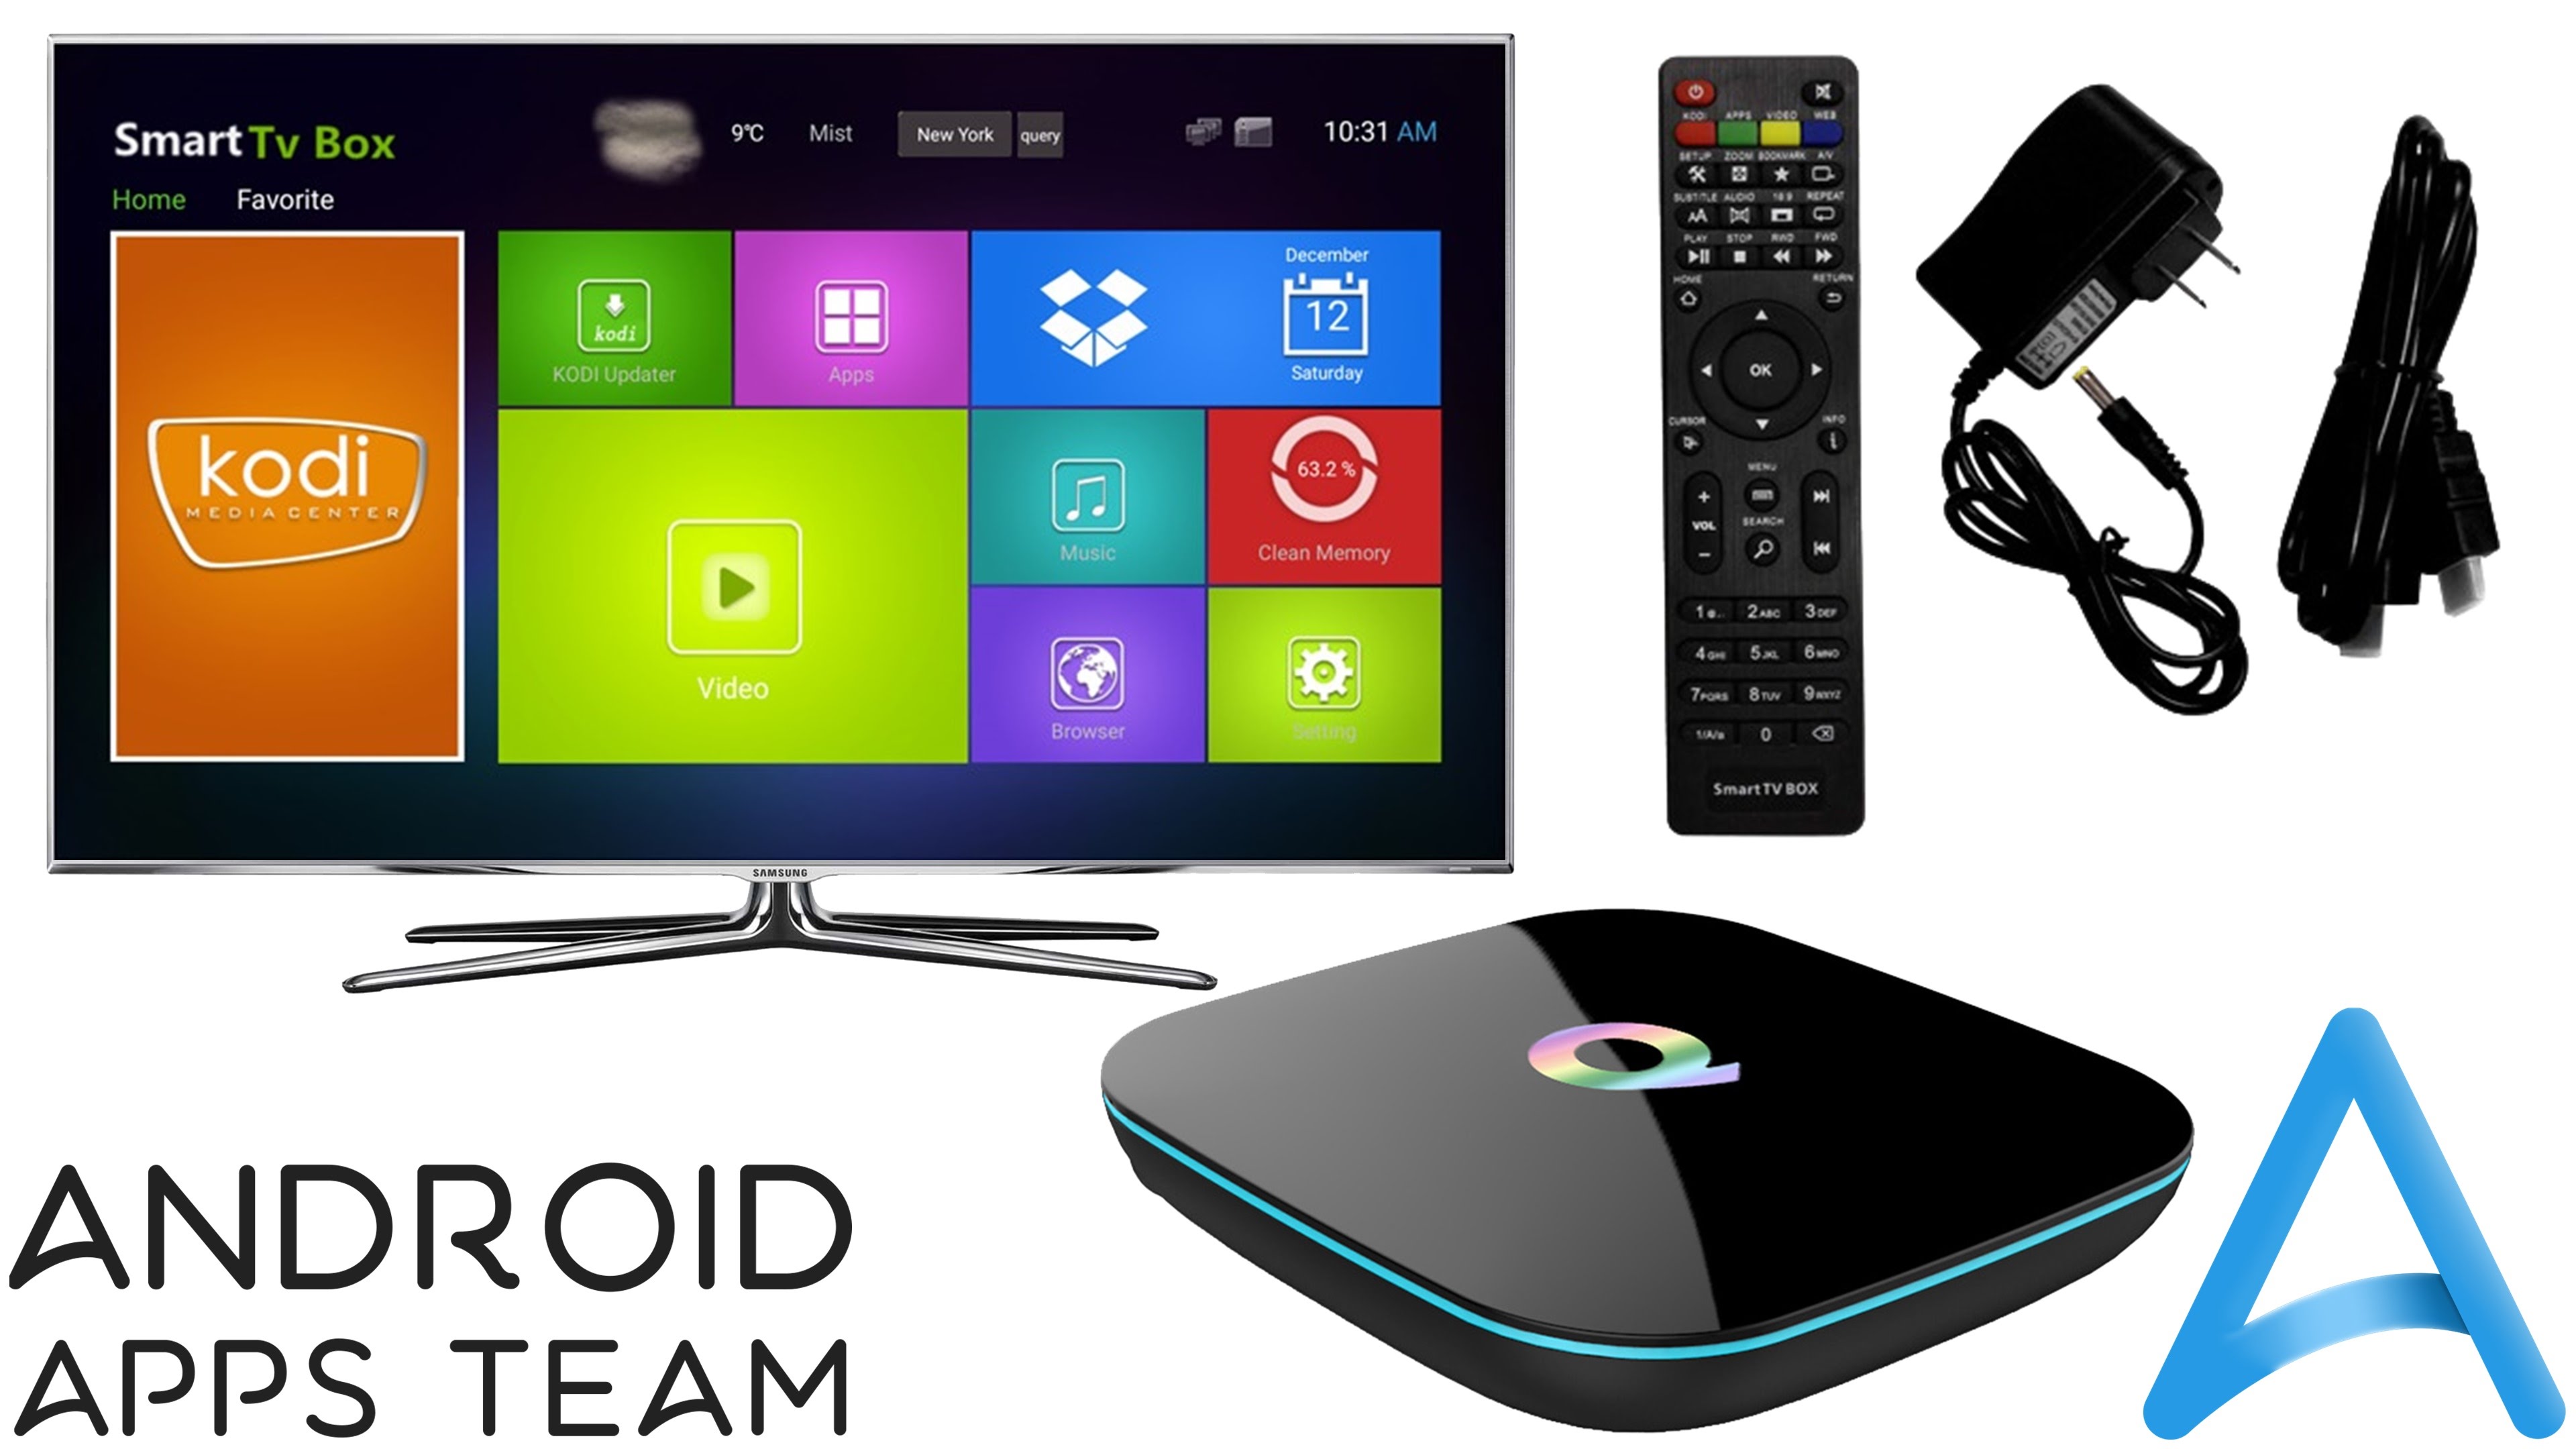 Телефон как тв бокс. Смарт ТВ q100w. Smart Box TV q1 Mini. Платформа Smart TV: Android TV a75lu6500. TV Box андроид приставка.